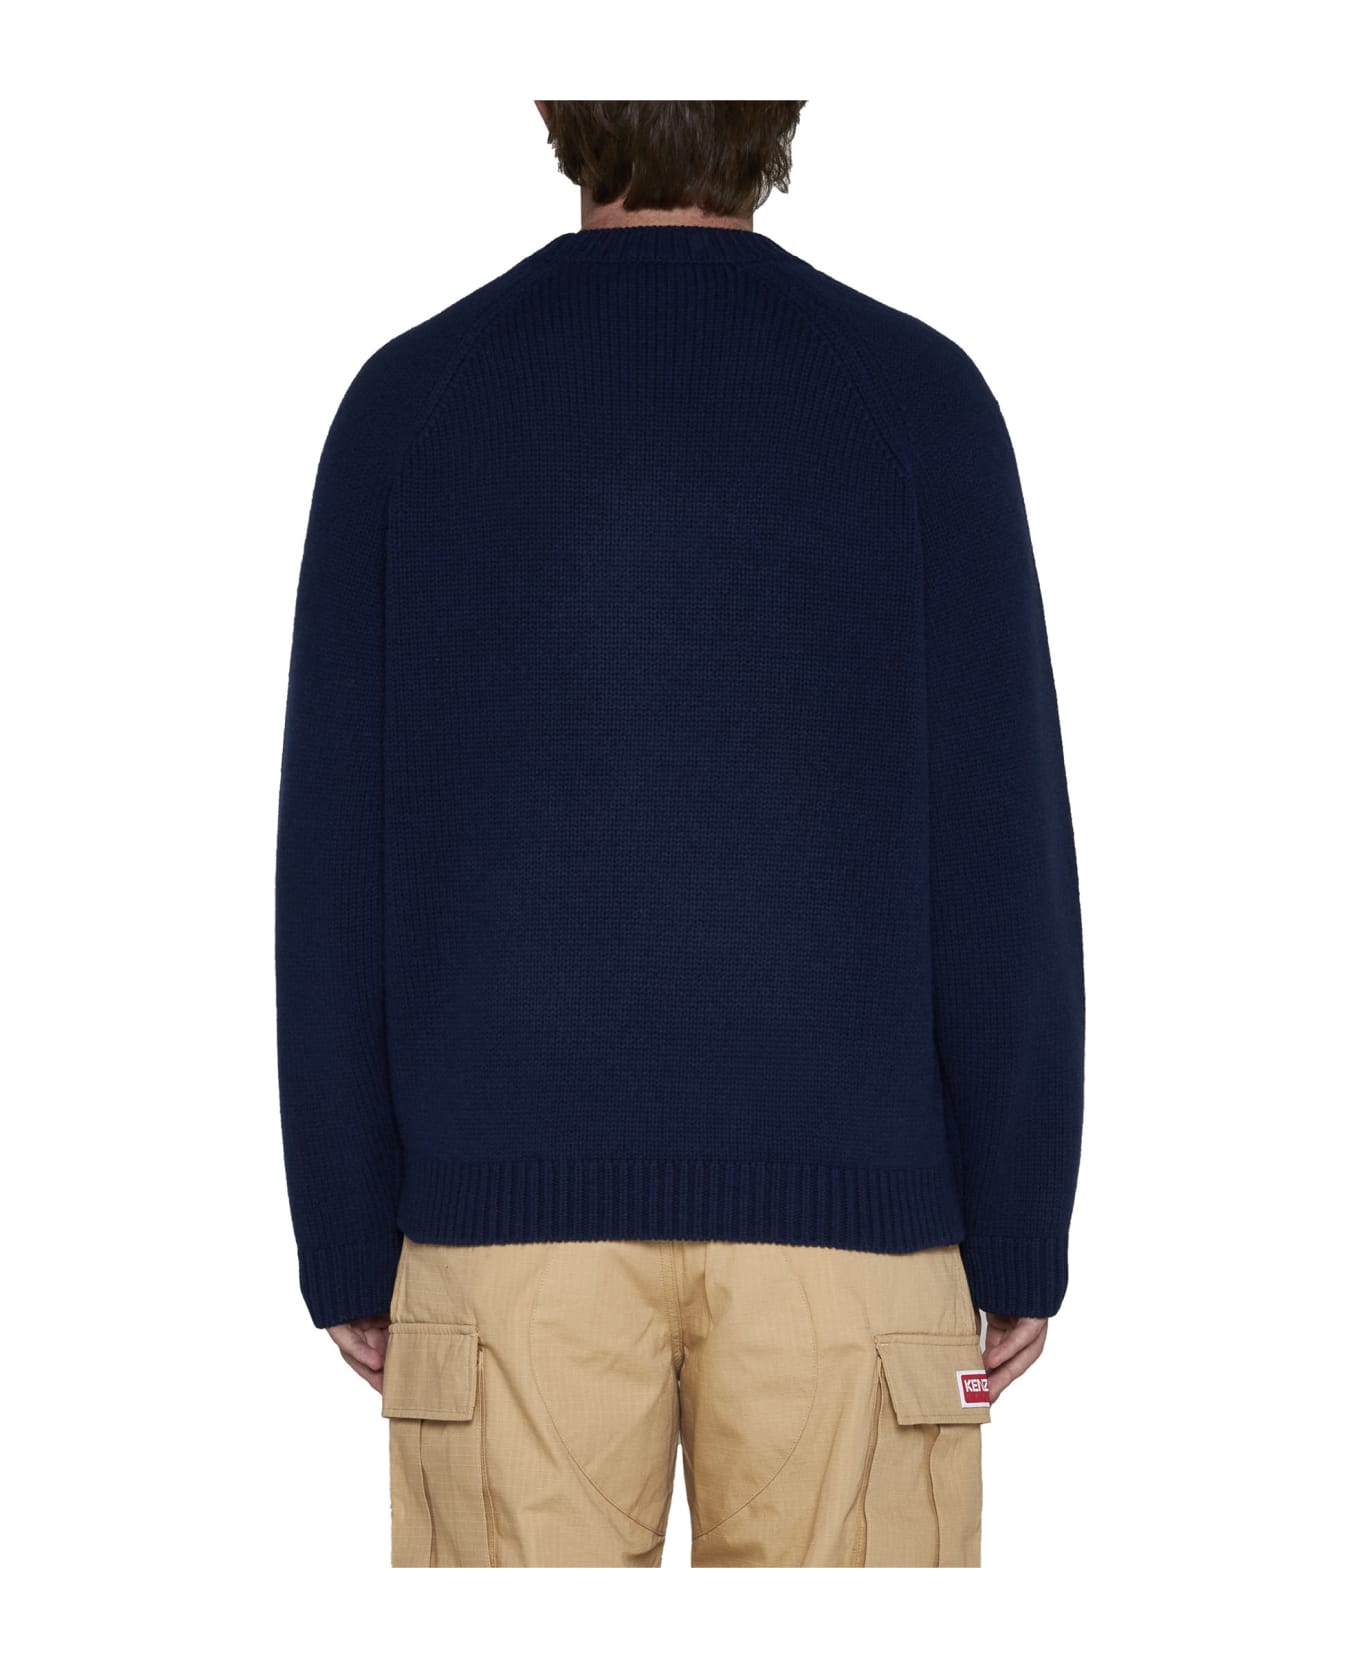 Kenzo Target Sweater - Bleu Nuit